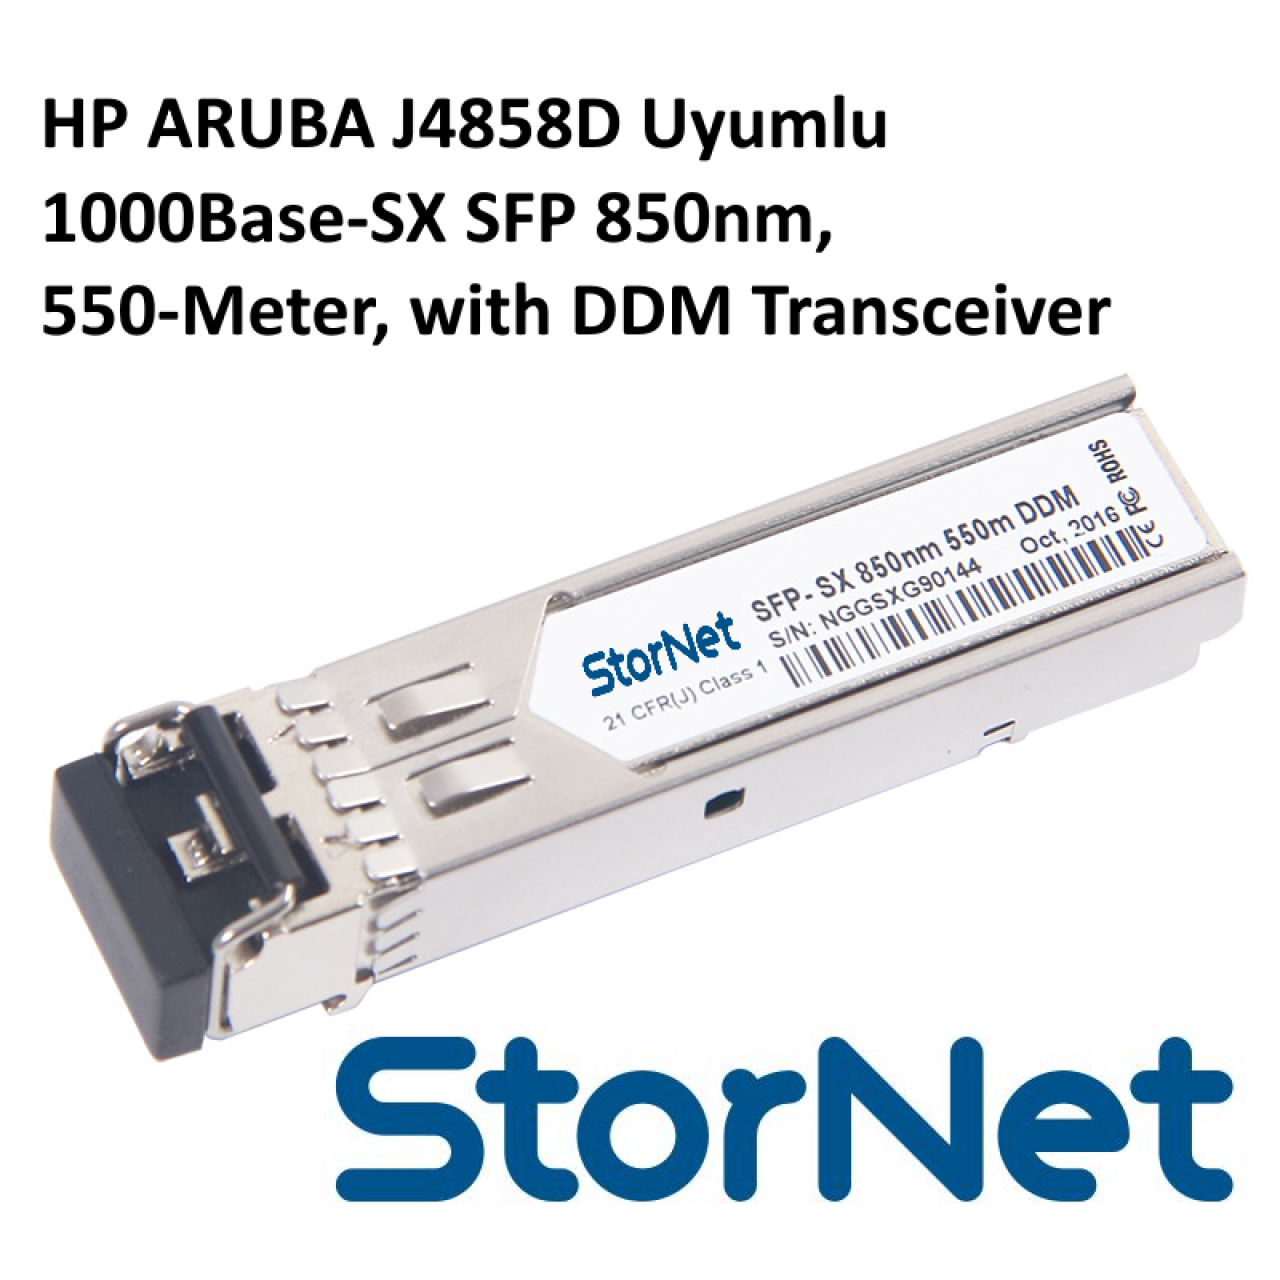 HP ARUBA J4858D Uyumlu 1000Base-SX SFP 850nm, 550-Meter, with DDM Transceiver